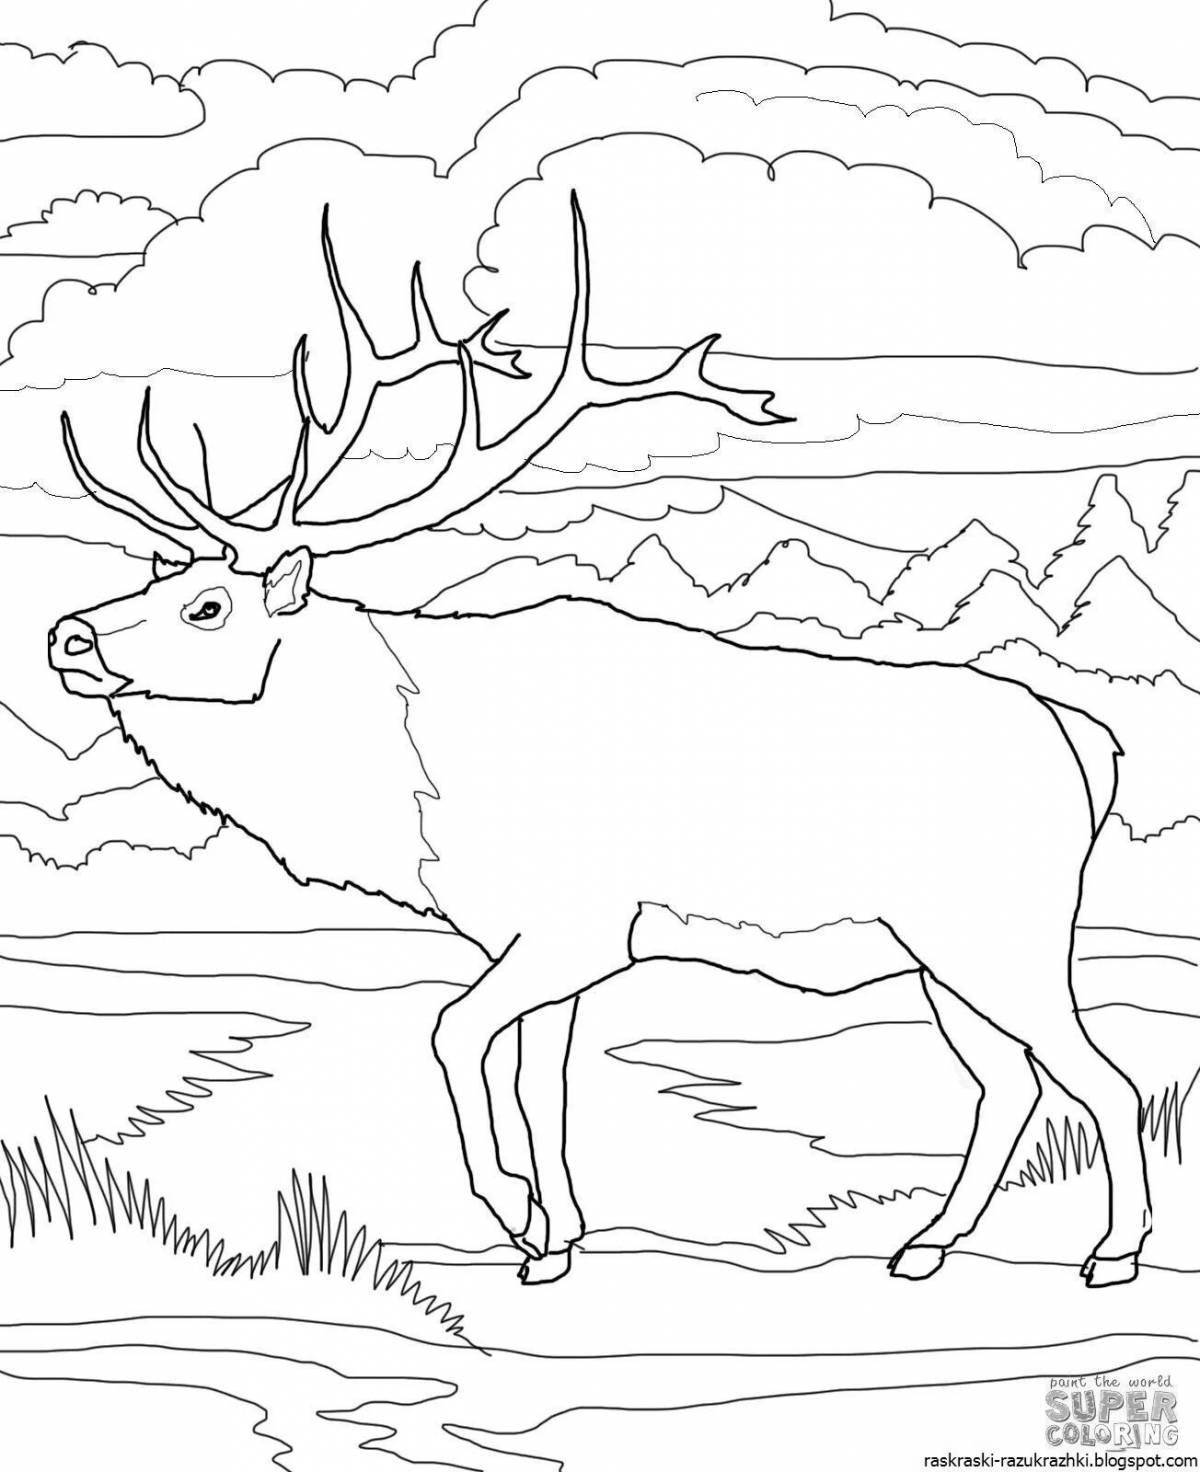 Soulful reindeer coloring page